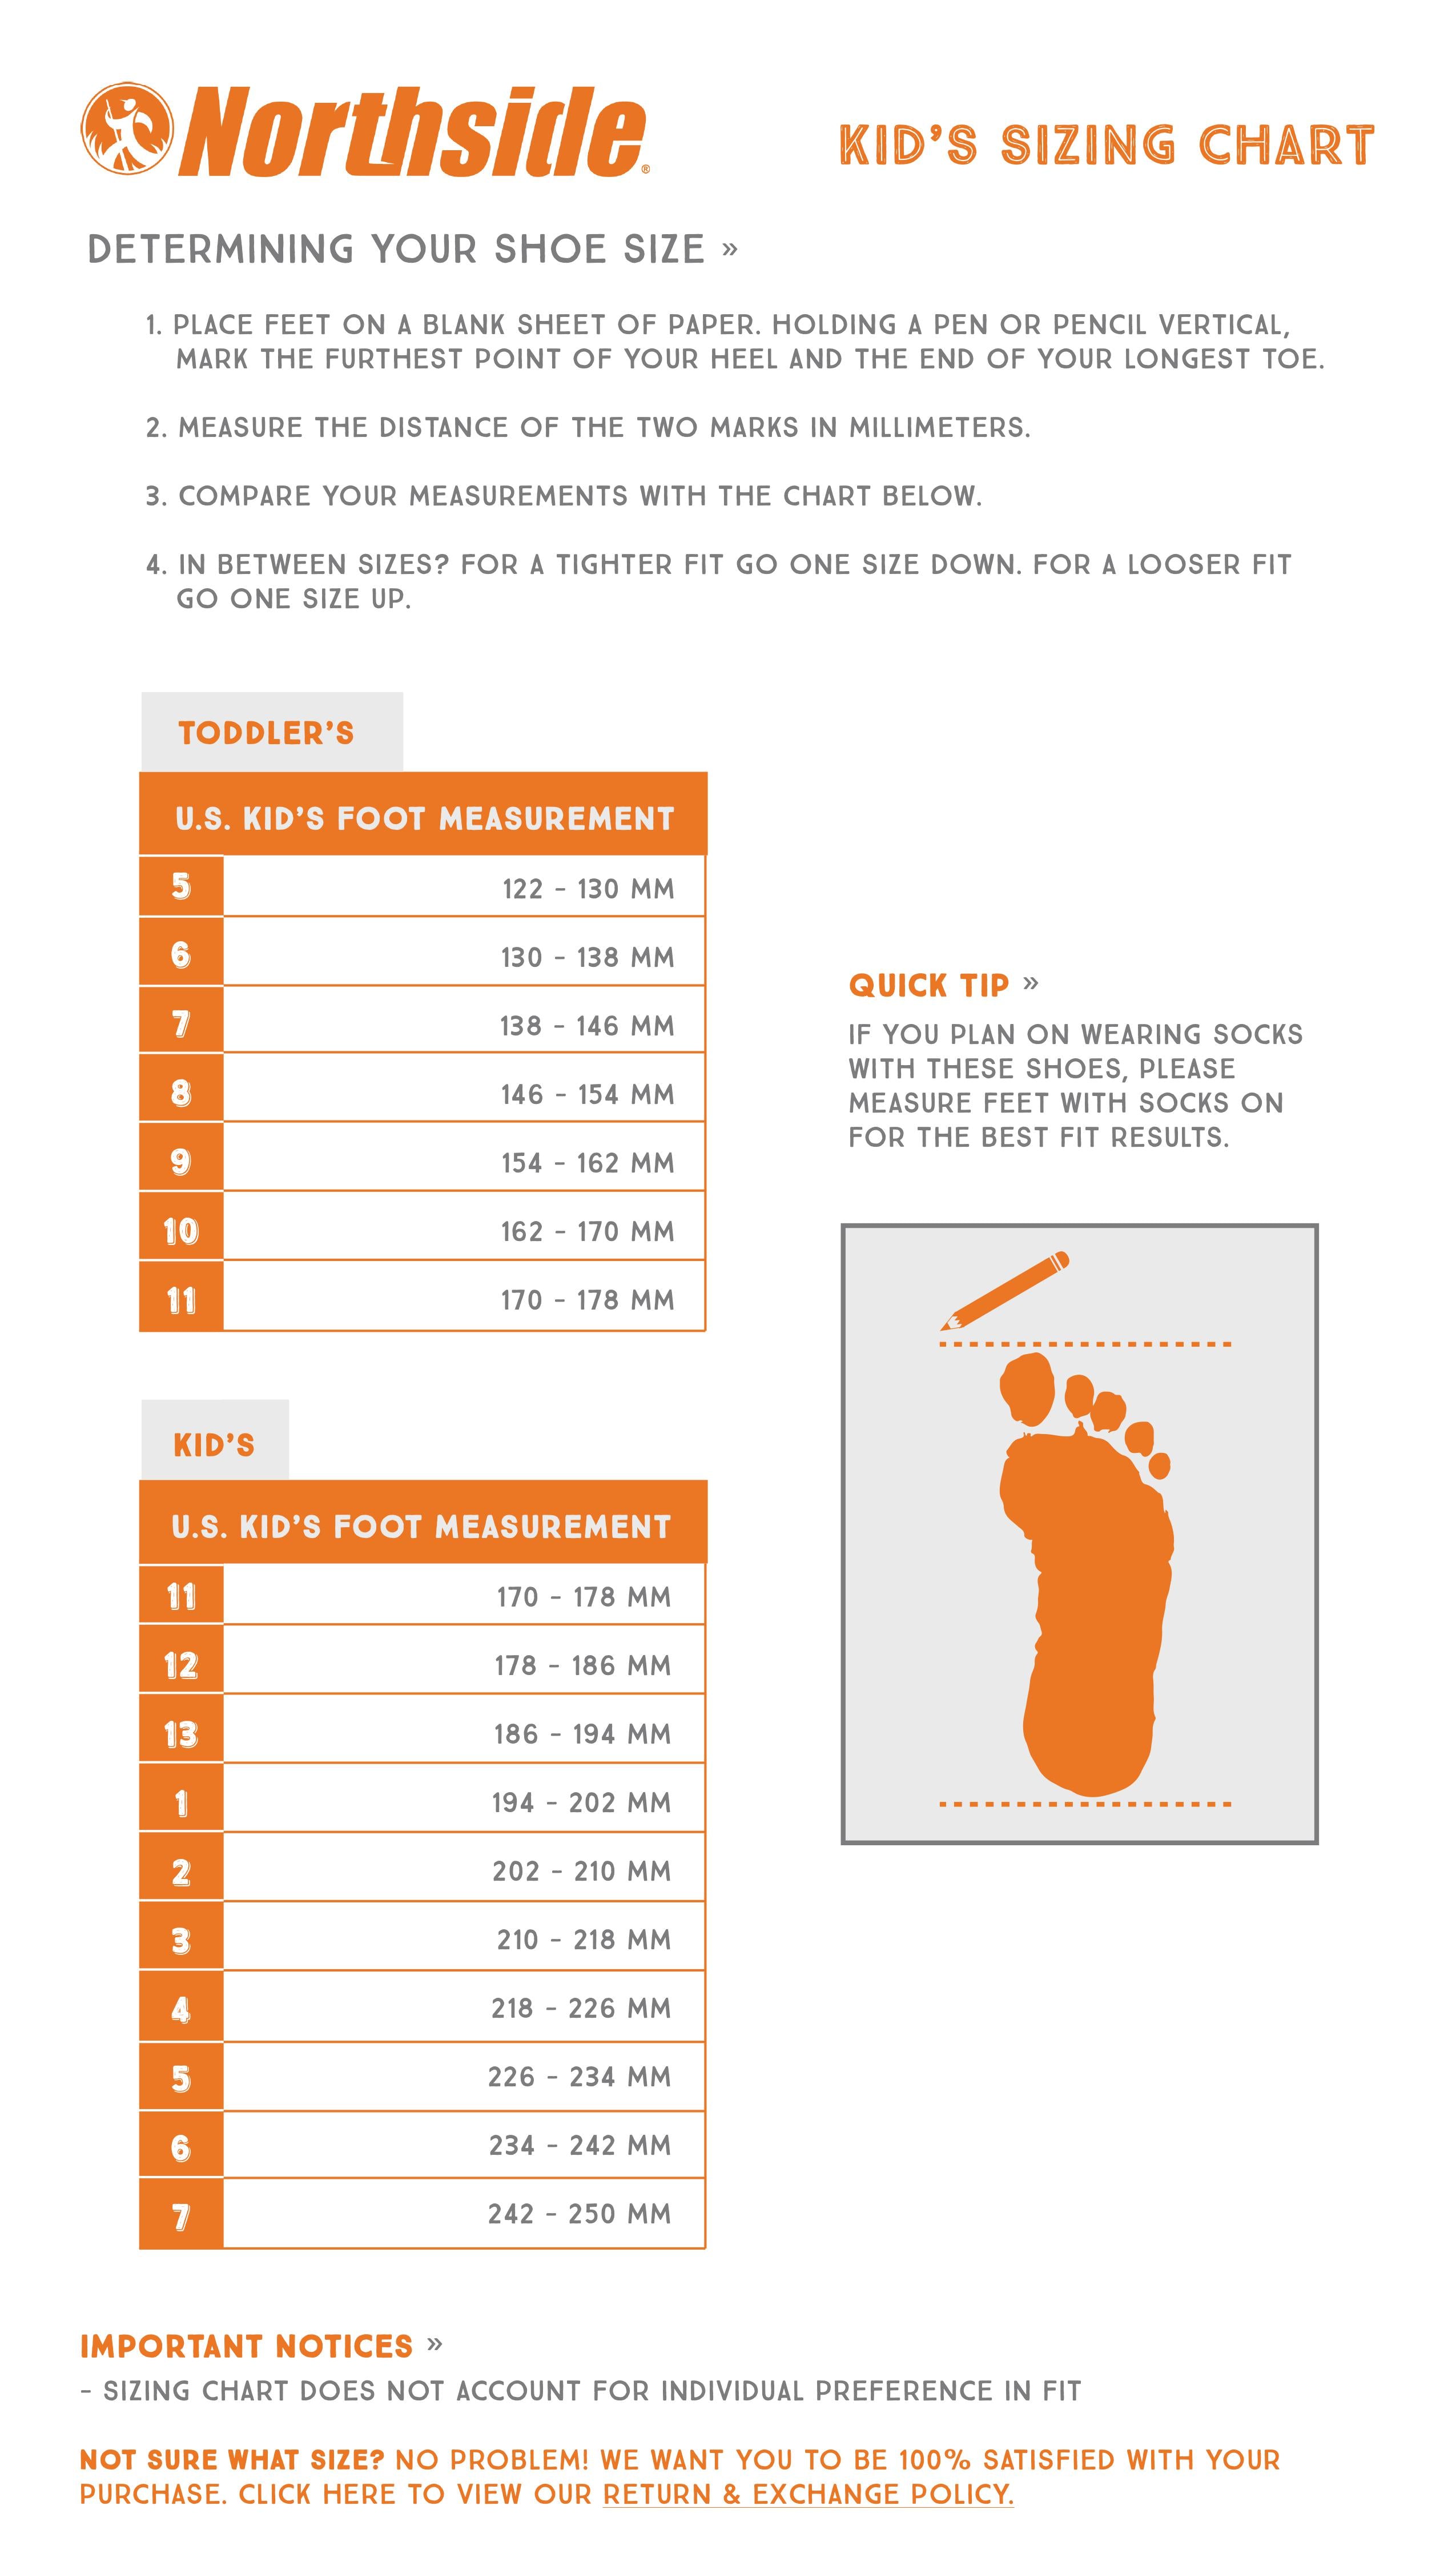 Peloton Shoe Size Chart